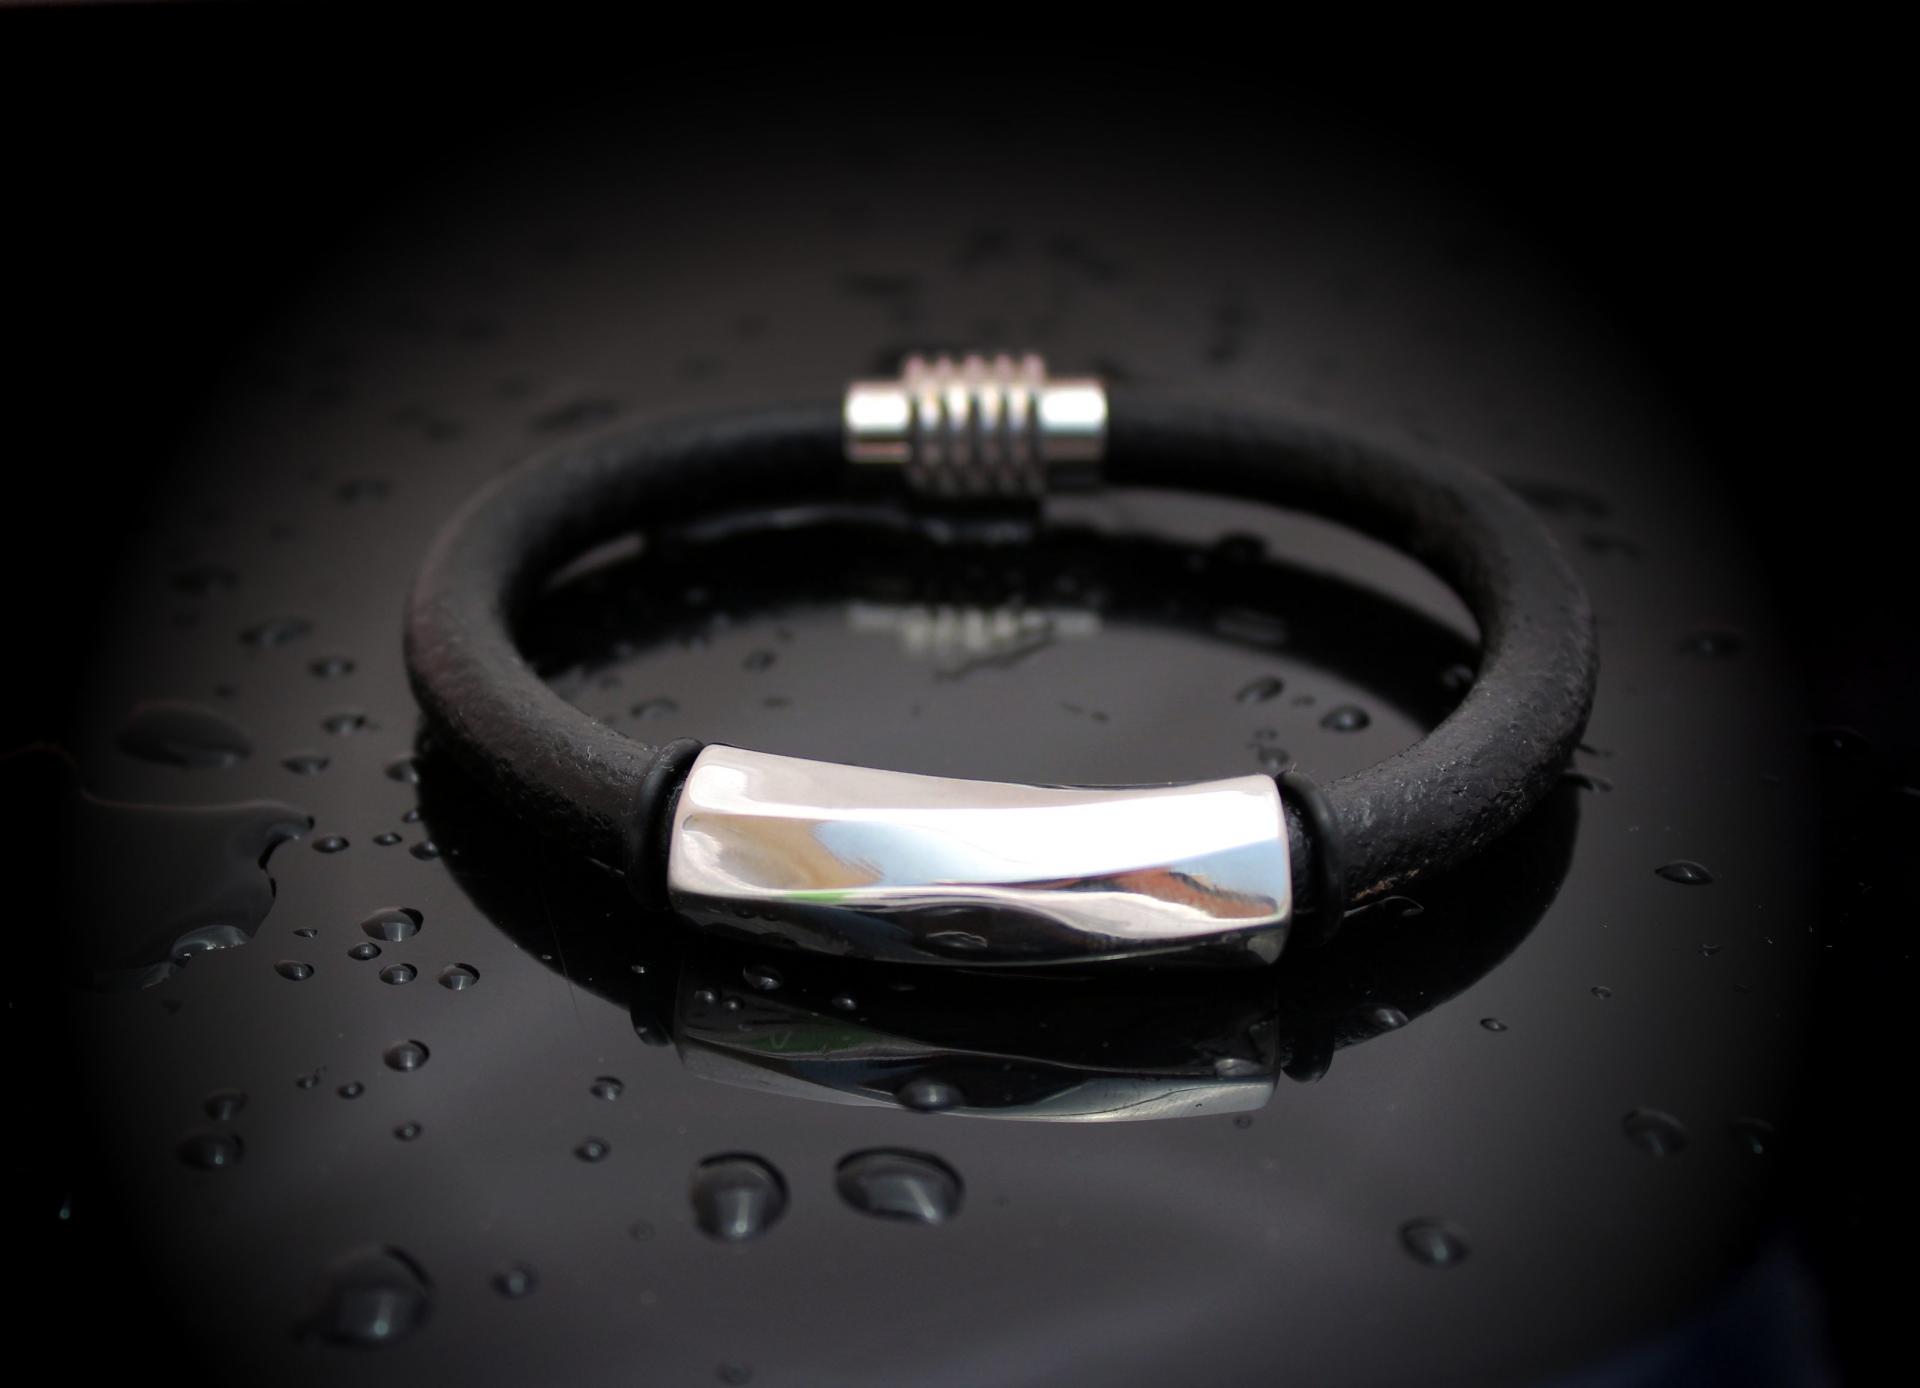 Leather & Steel Unisex Bracelets - 2 Designs - Made To Measure!